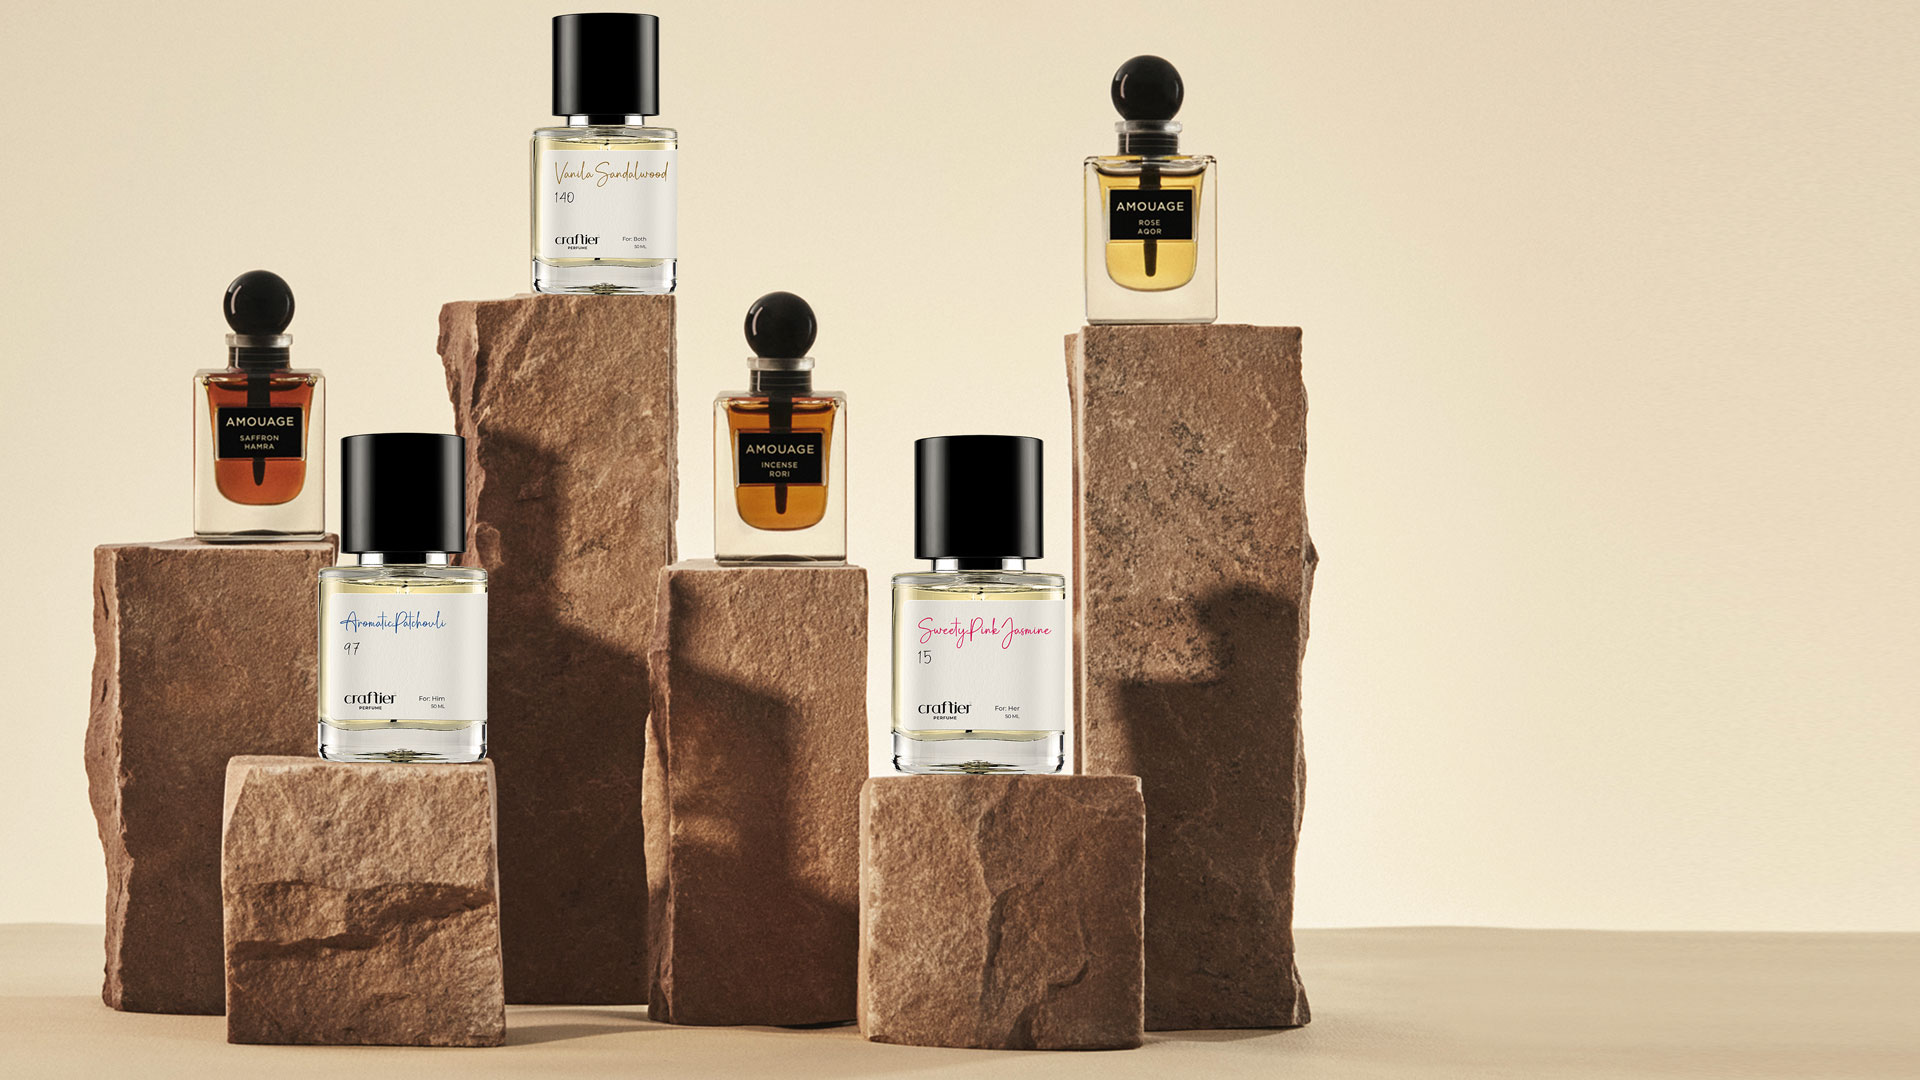 Luxurious Perfume Gift Set from Amouage